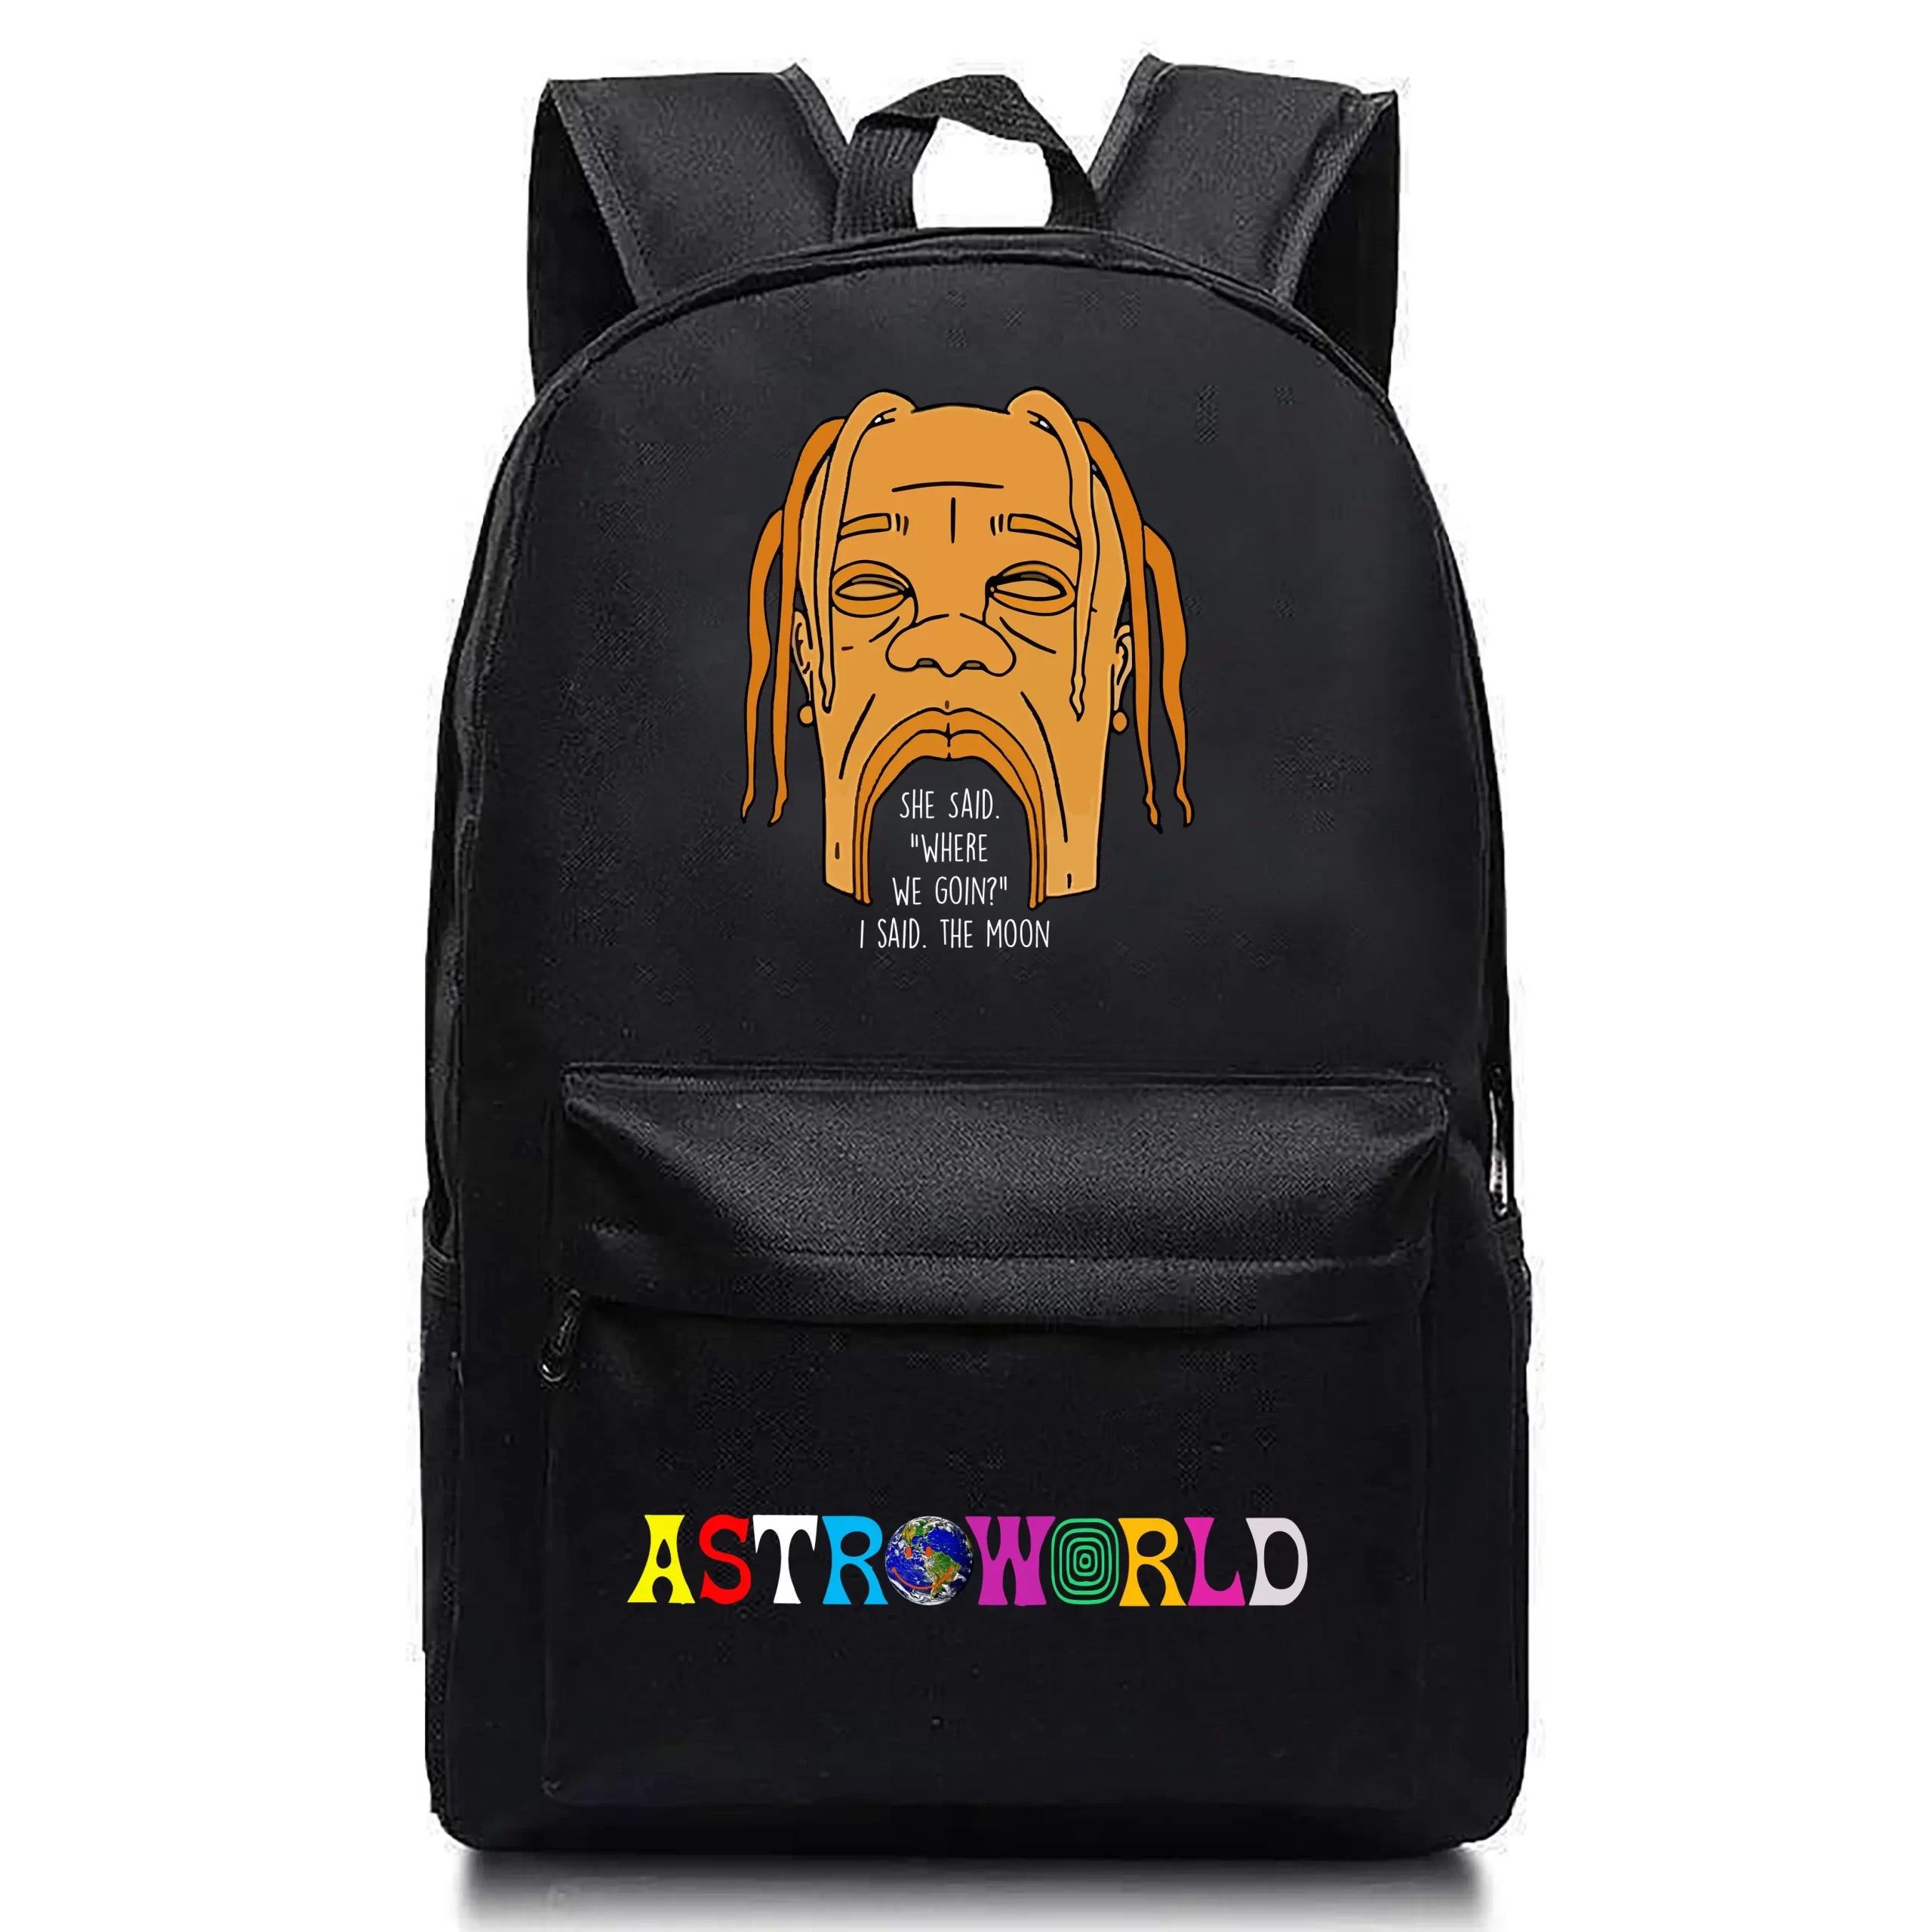 Astroworld Backpack